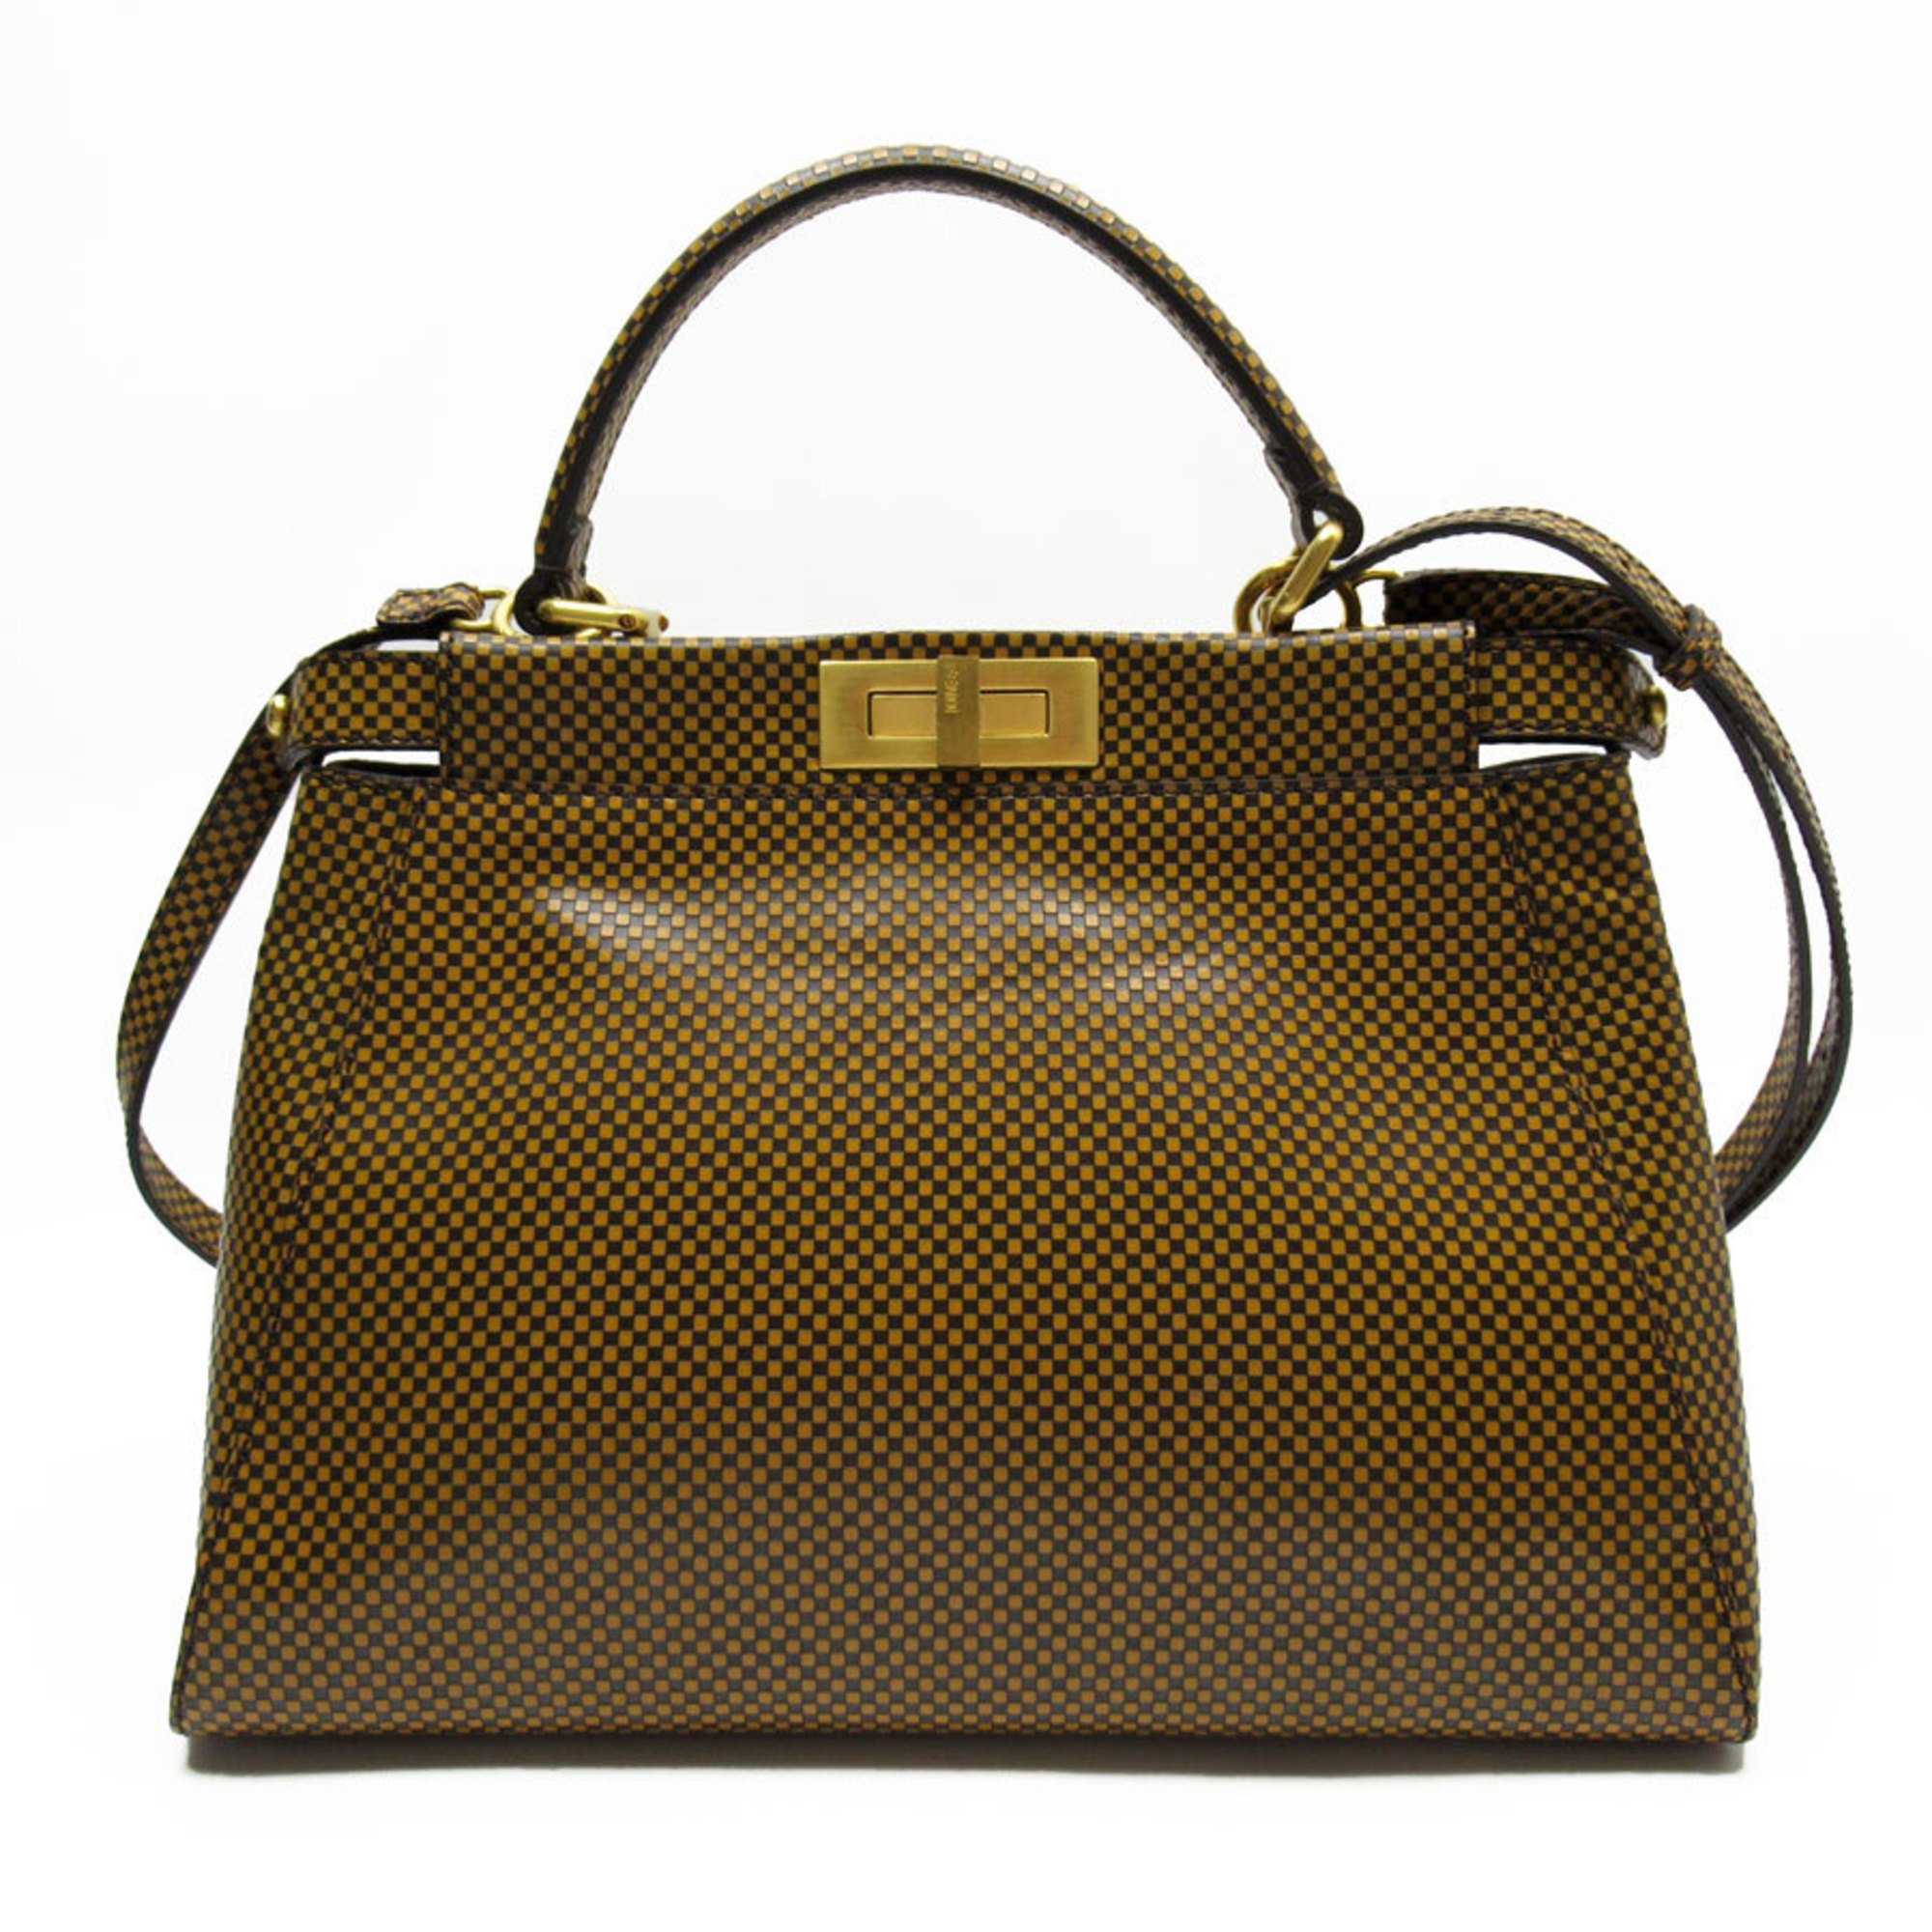 FENDI handbag shoulder bag peekaboo leather brown gold ladies w0189a